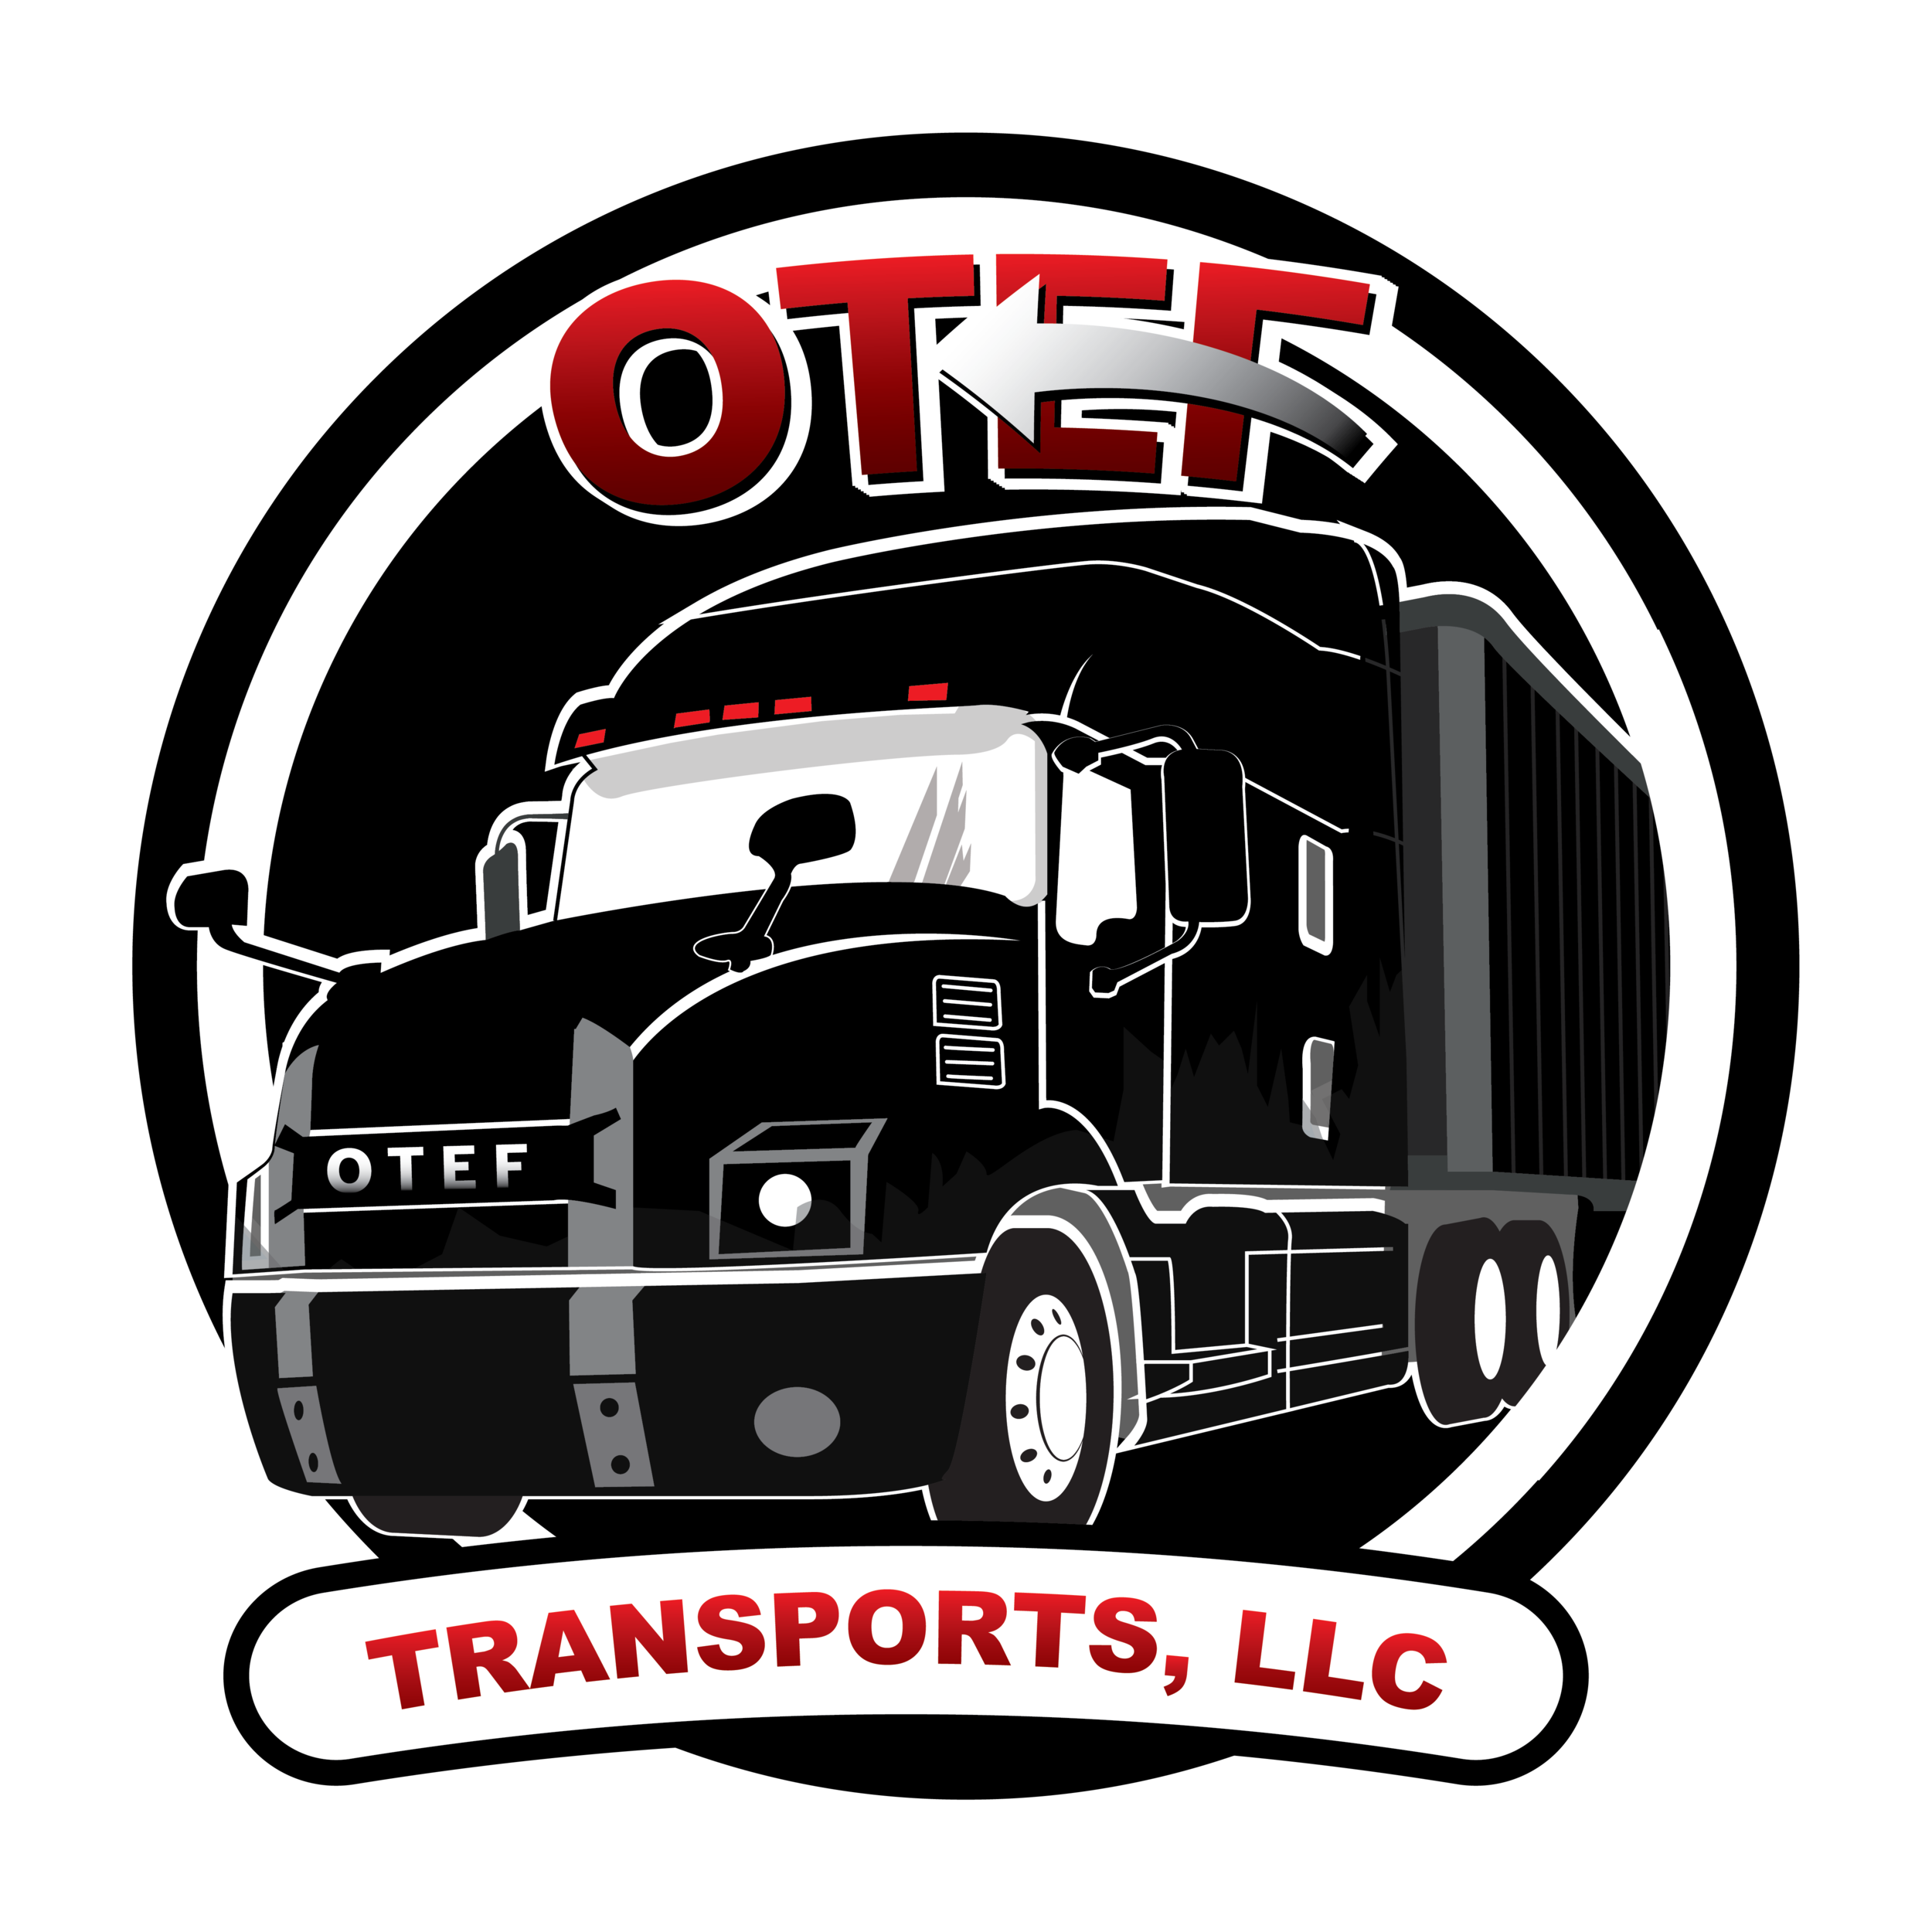 OTEF Transports LLC_Black Red.png